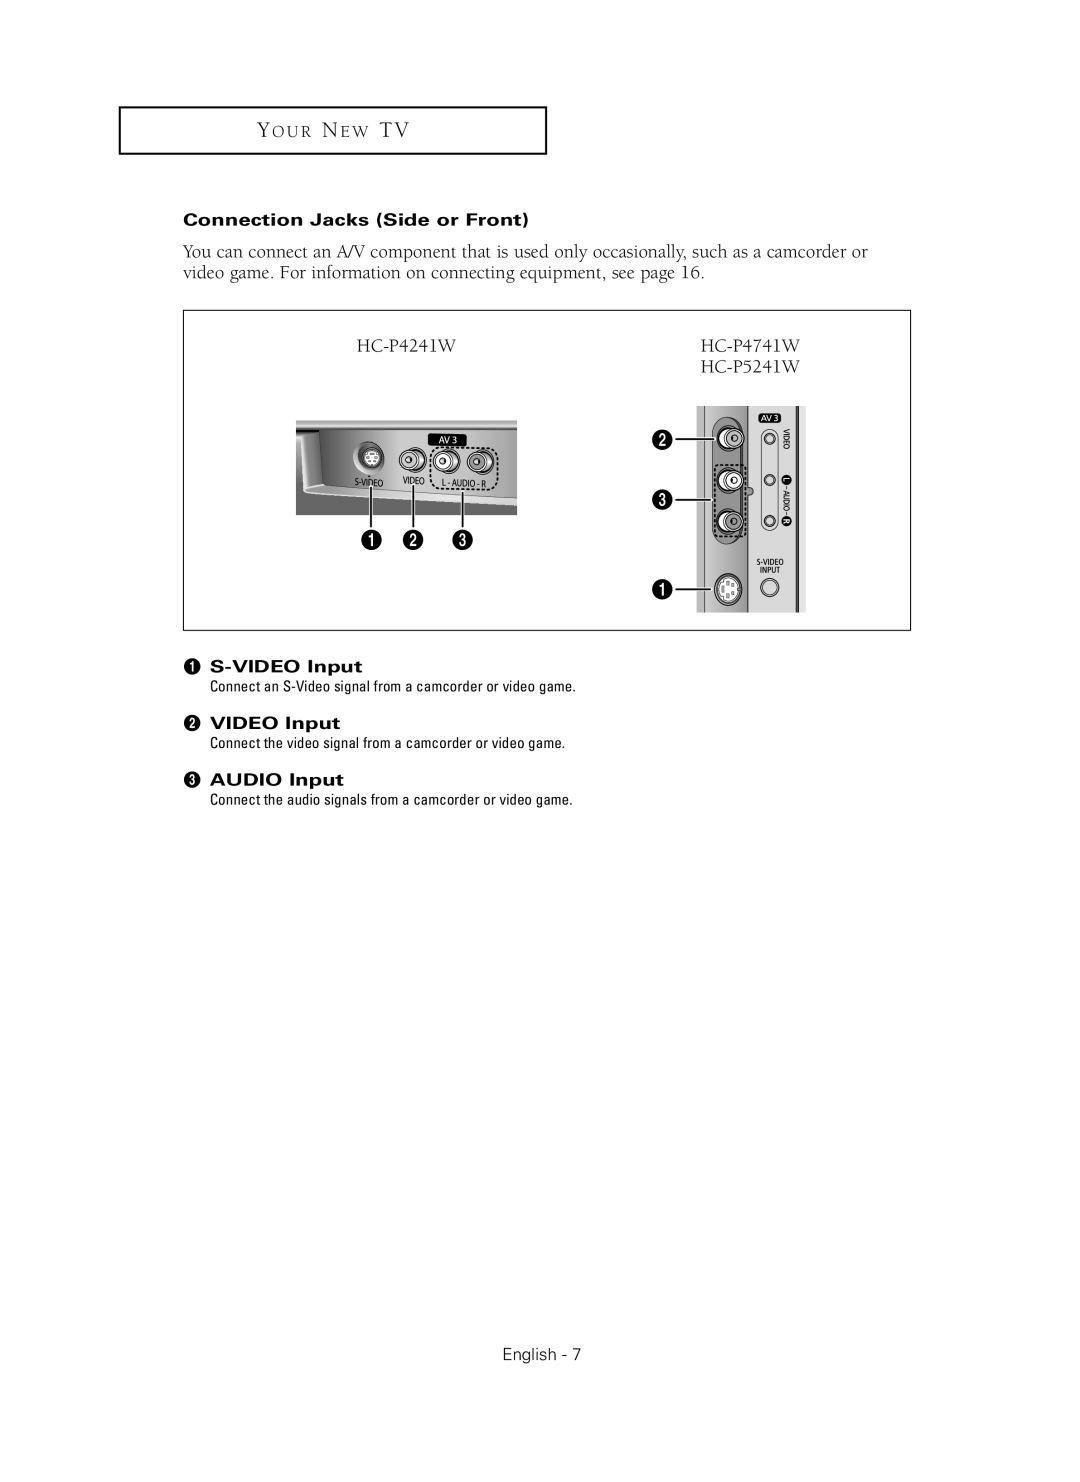 Samsung HC-P4241W HC-P4741W, HC-P5241W, Connection Jacks Side or Front, Œ S-VIDEO Input, ´ VIDEO Input, ˇ AUDIO Input 